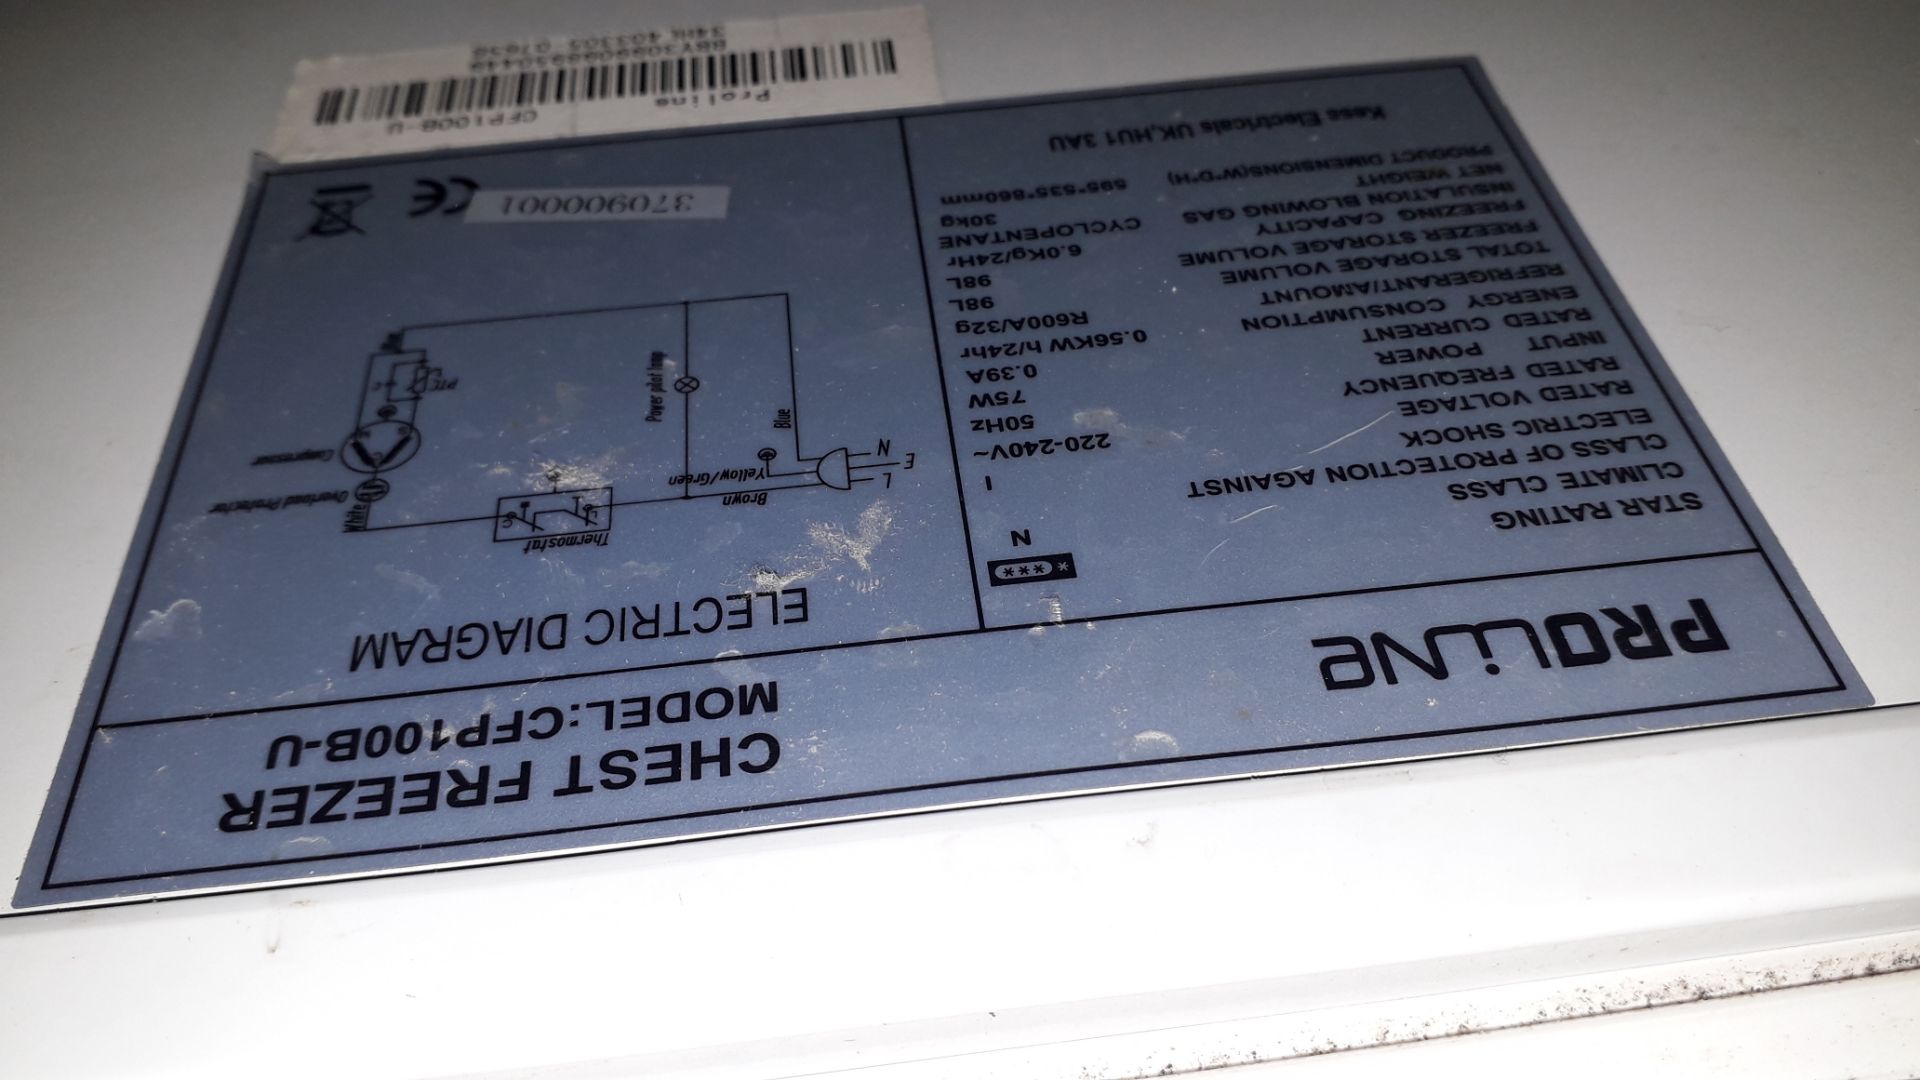 Beko TZS490 Upright Freezer 18Ltr Capacity, Serial Number 0110515406 Proline CFP100BU Chest Freezer - Image 5 of 5